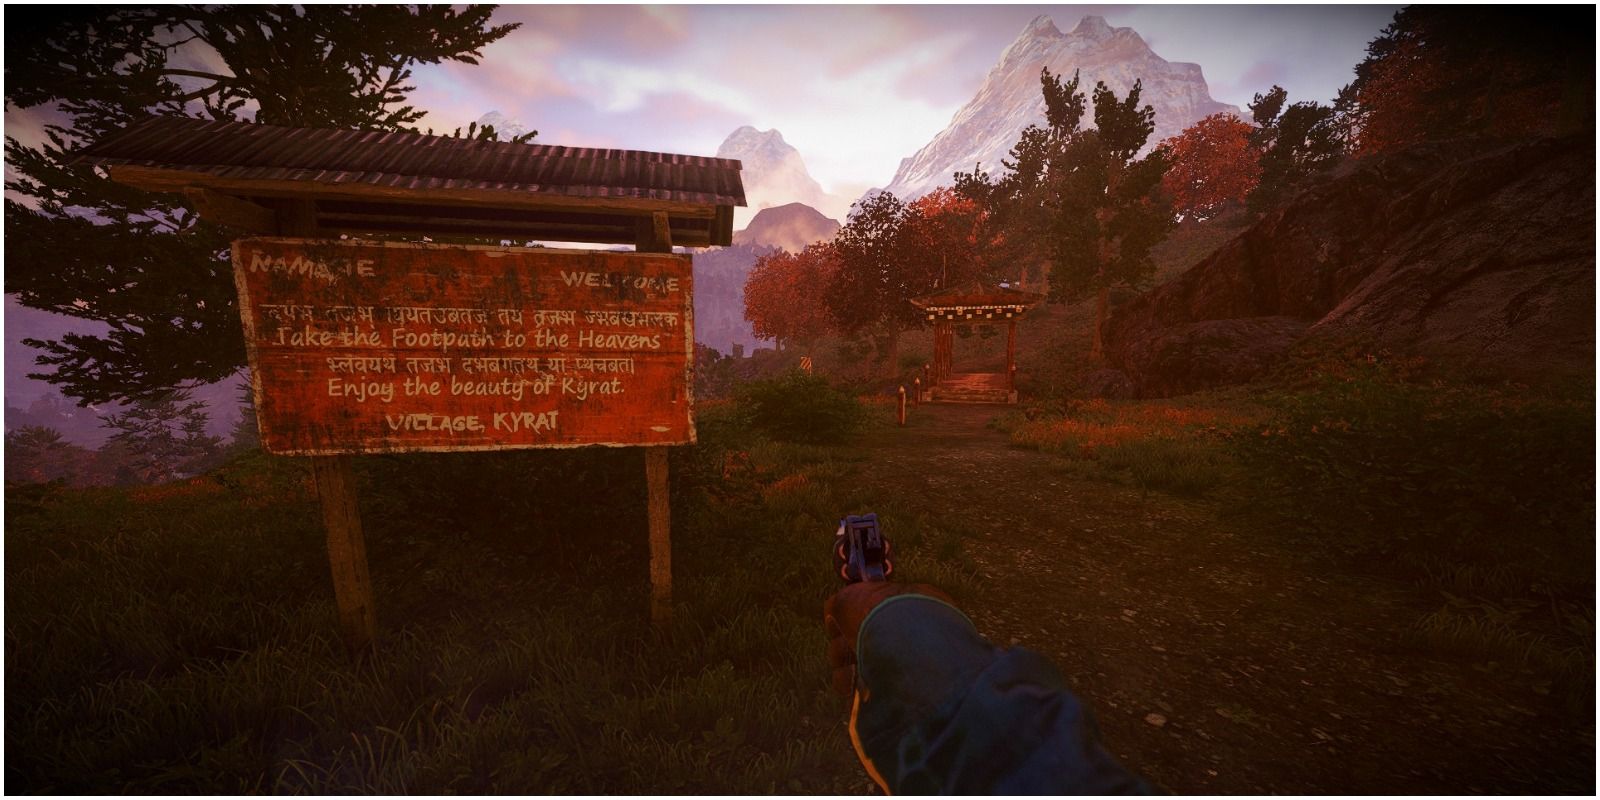 Kyrat village sign in Far Cry 4